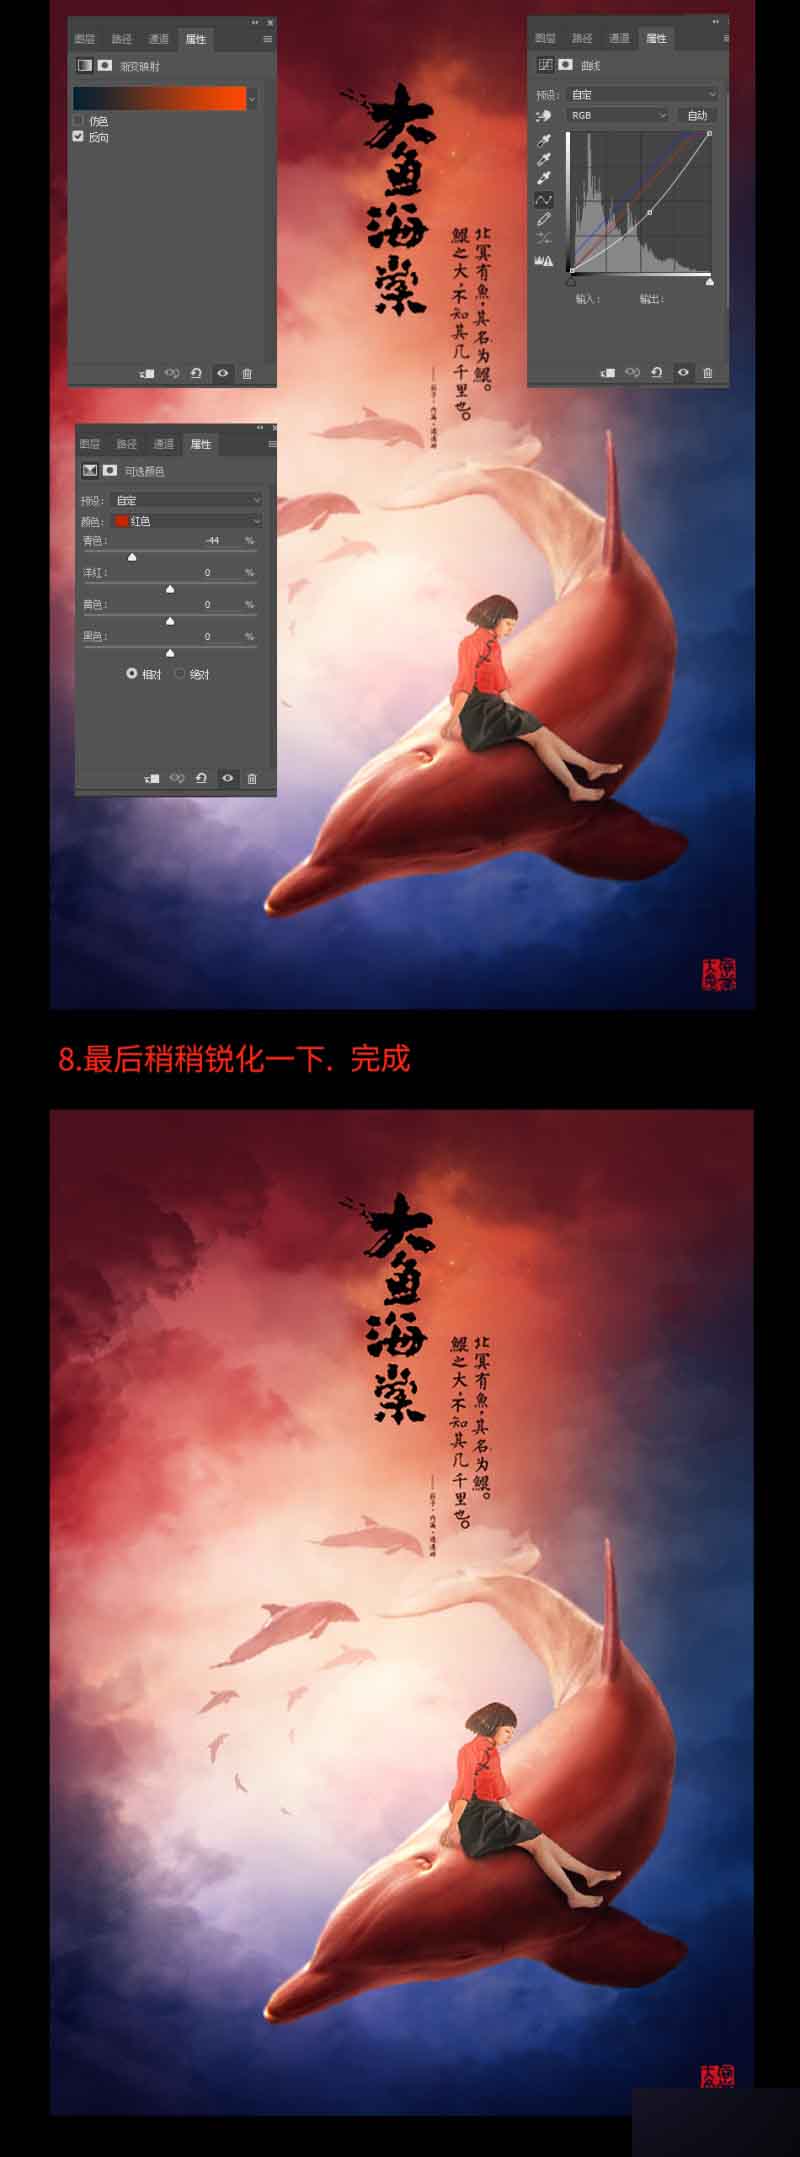 PS合成国产动画大鱼海棠电影海报